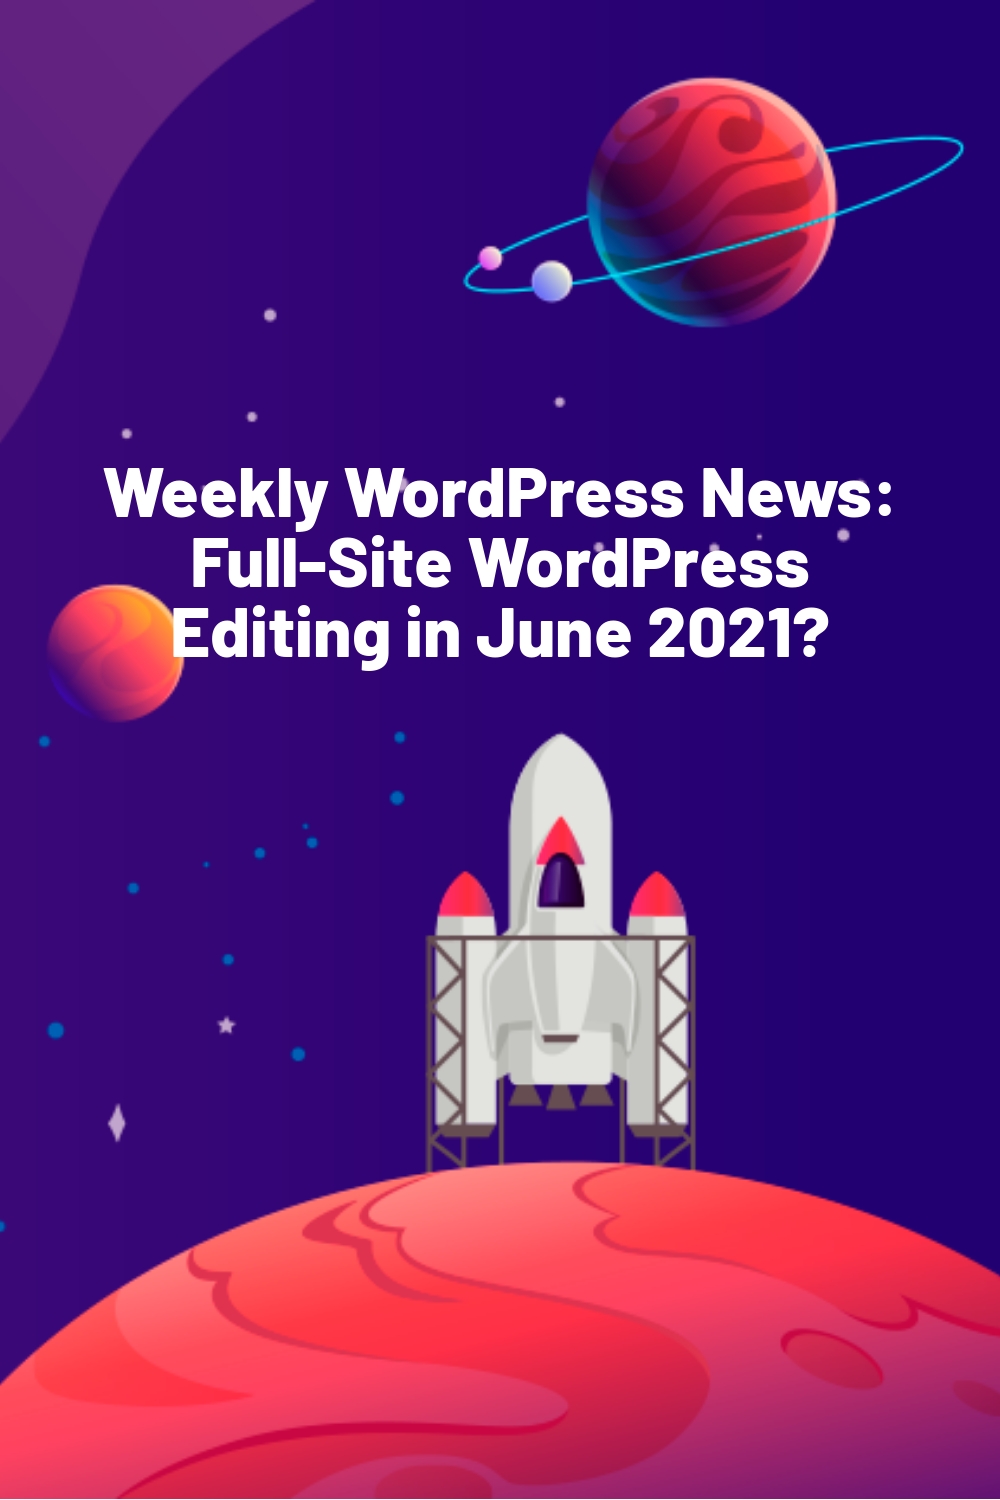 Weekly WordPress News: Full-Site WordPress Editing in June 2021?